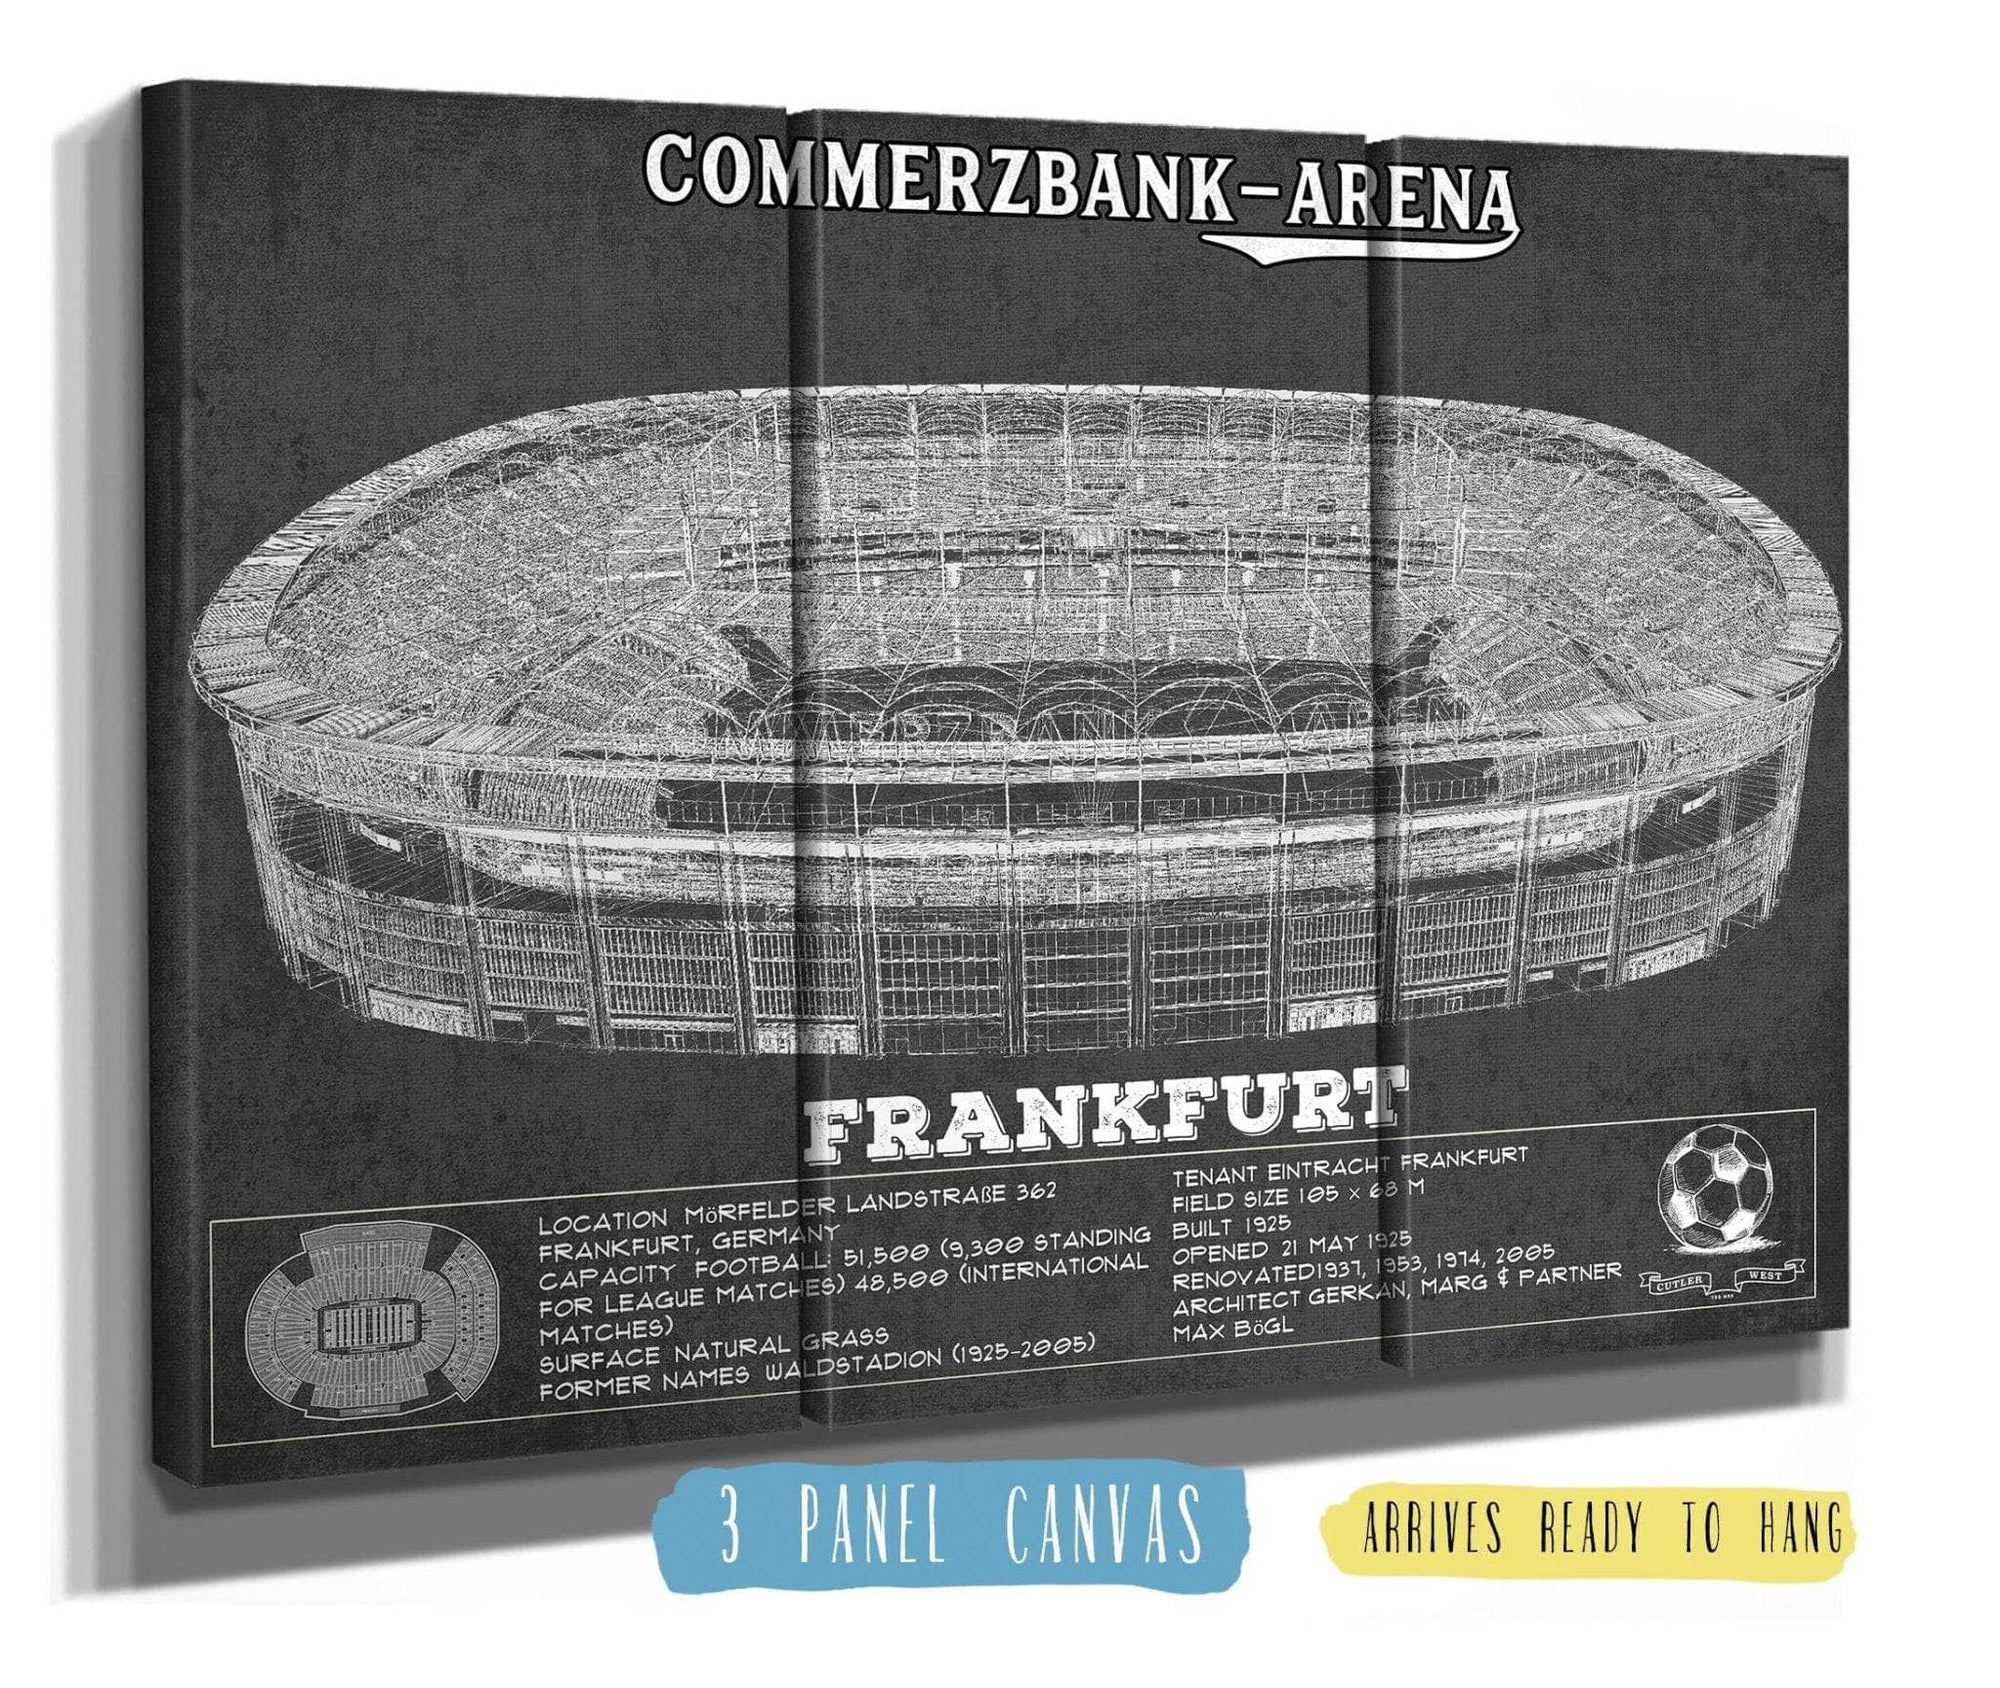 Cutler West Soccer Collection 48" x 32" / 3 Panel Canvas Wrap Eintracht Frankfurt FC - Commerzbank-Arena Soccer Print 715266989_66821